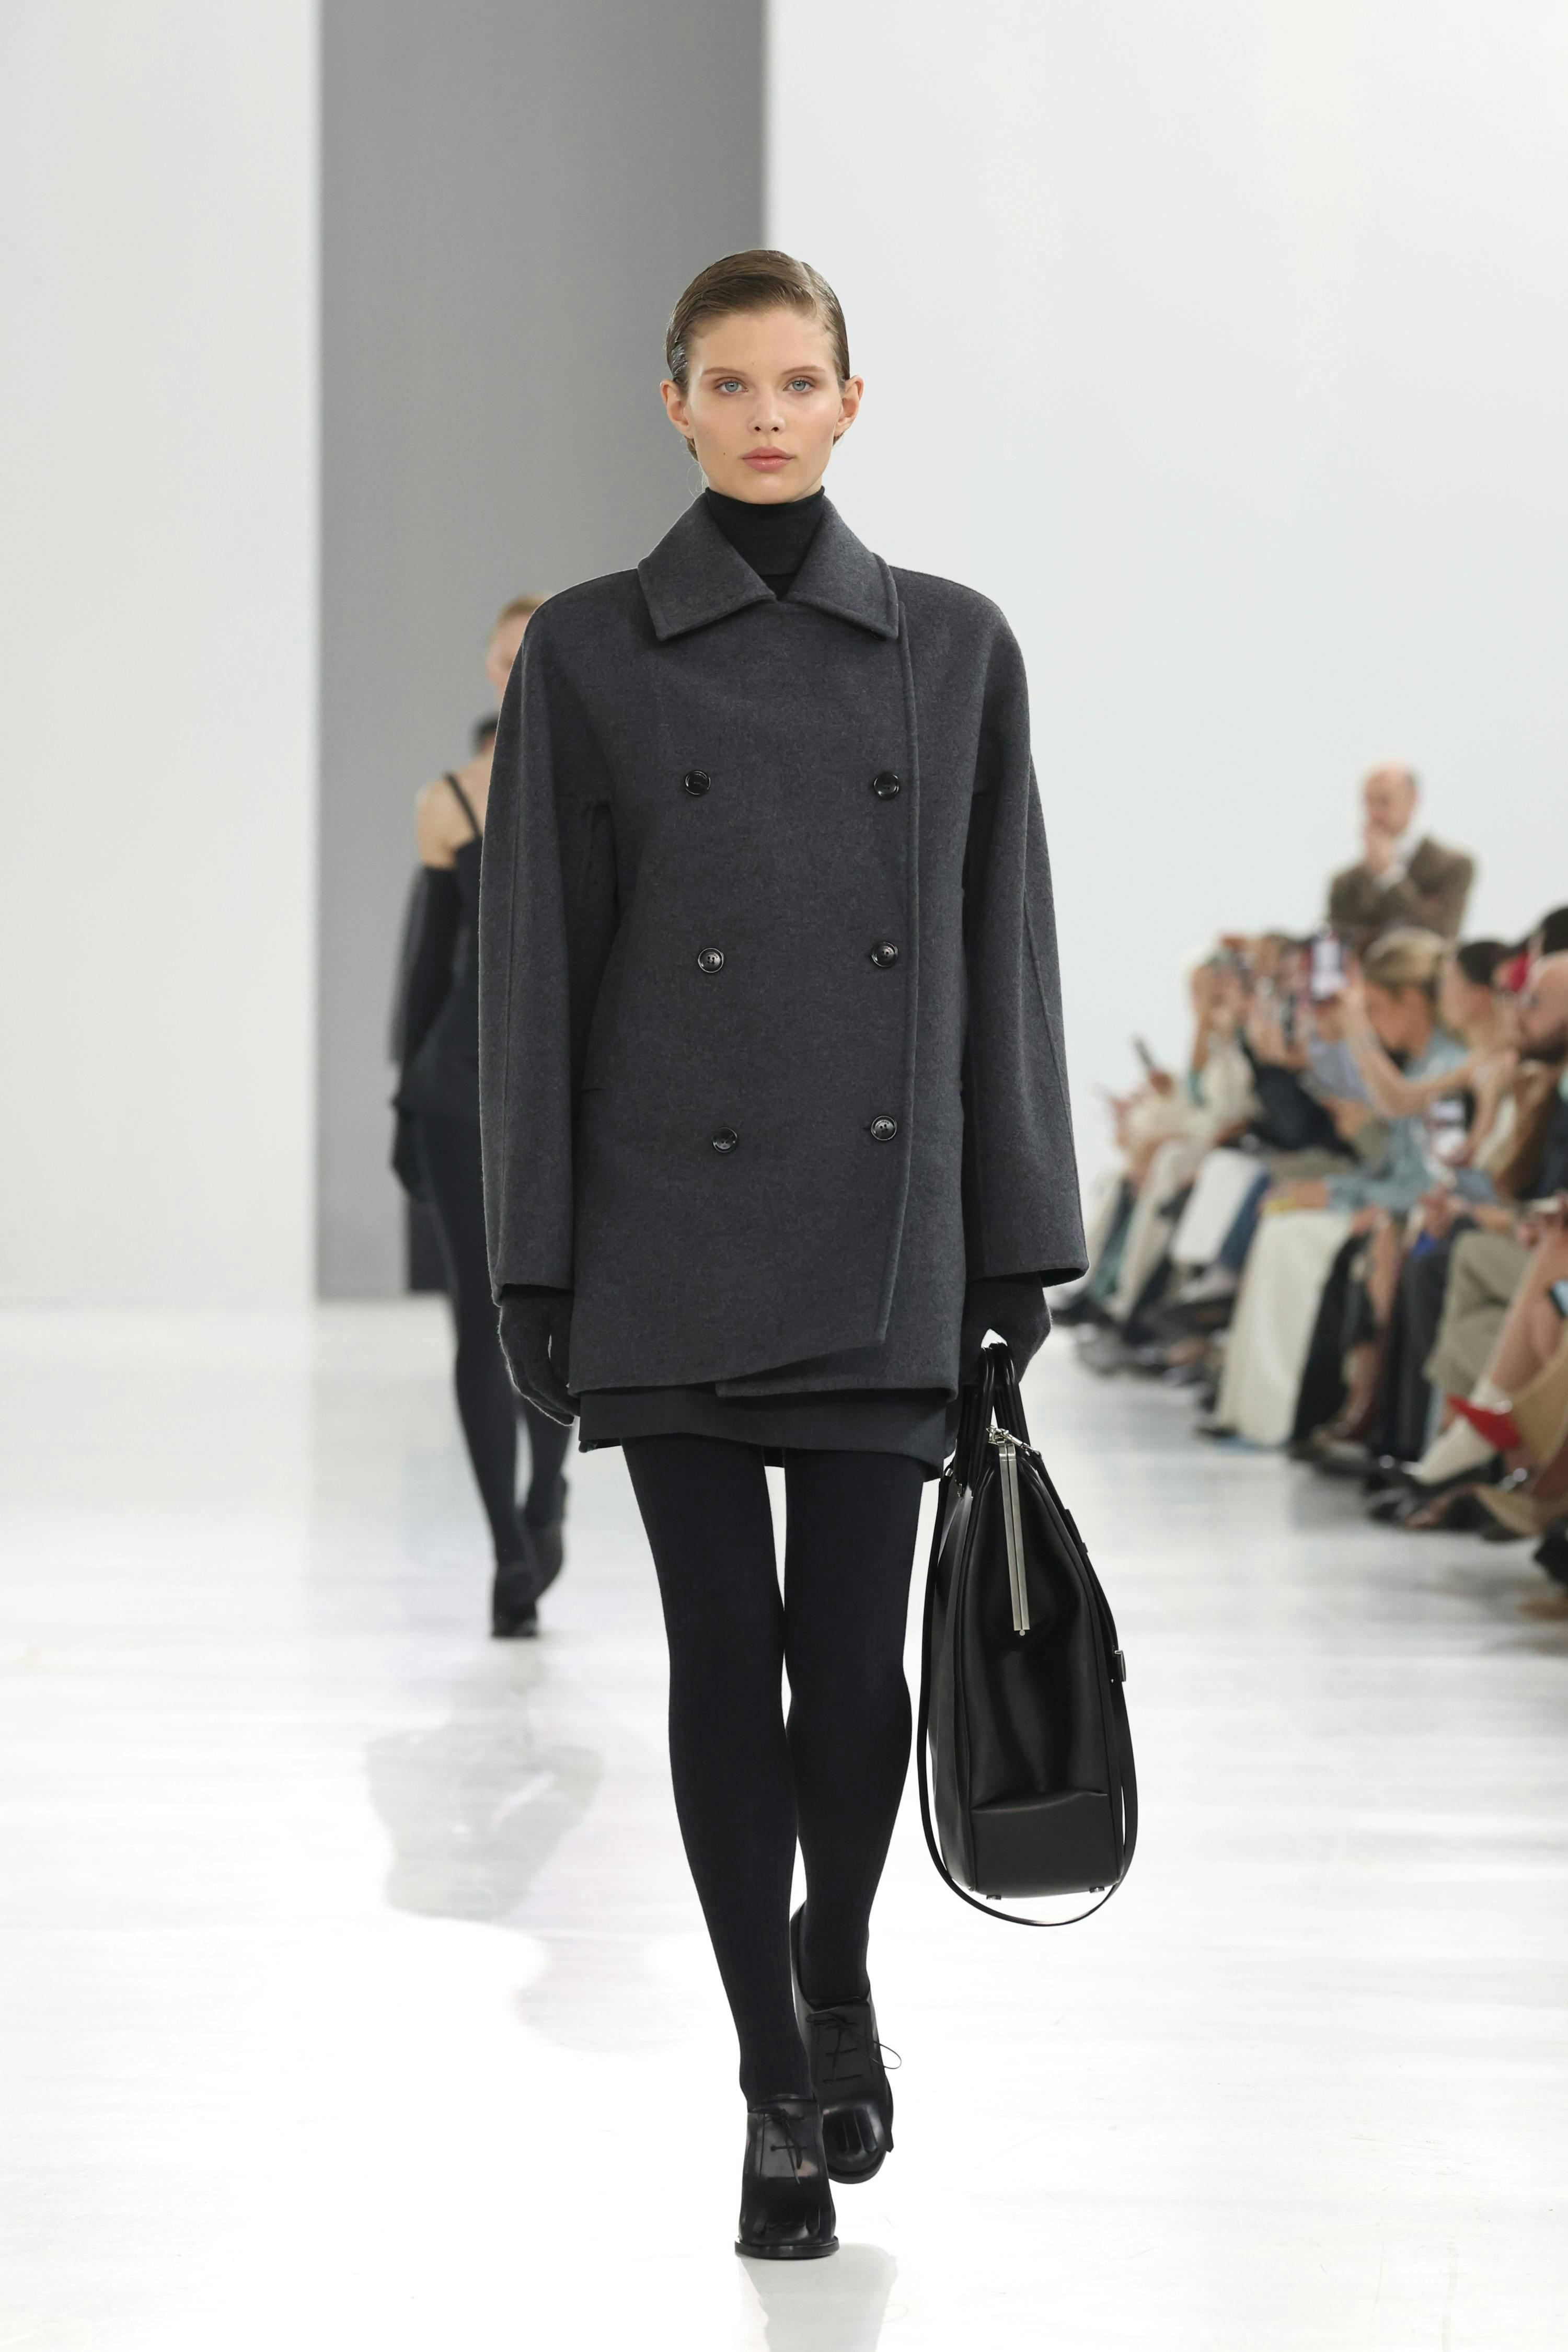 milan coat adult female person woman fashion long sleeve handbag overcoat man